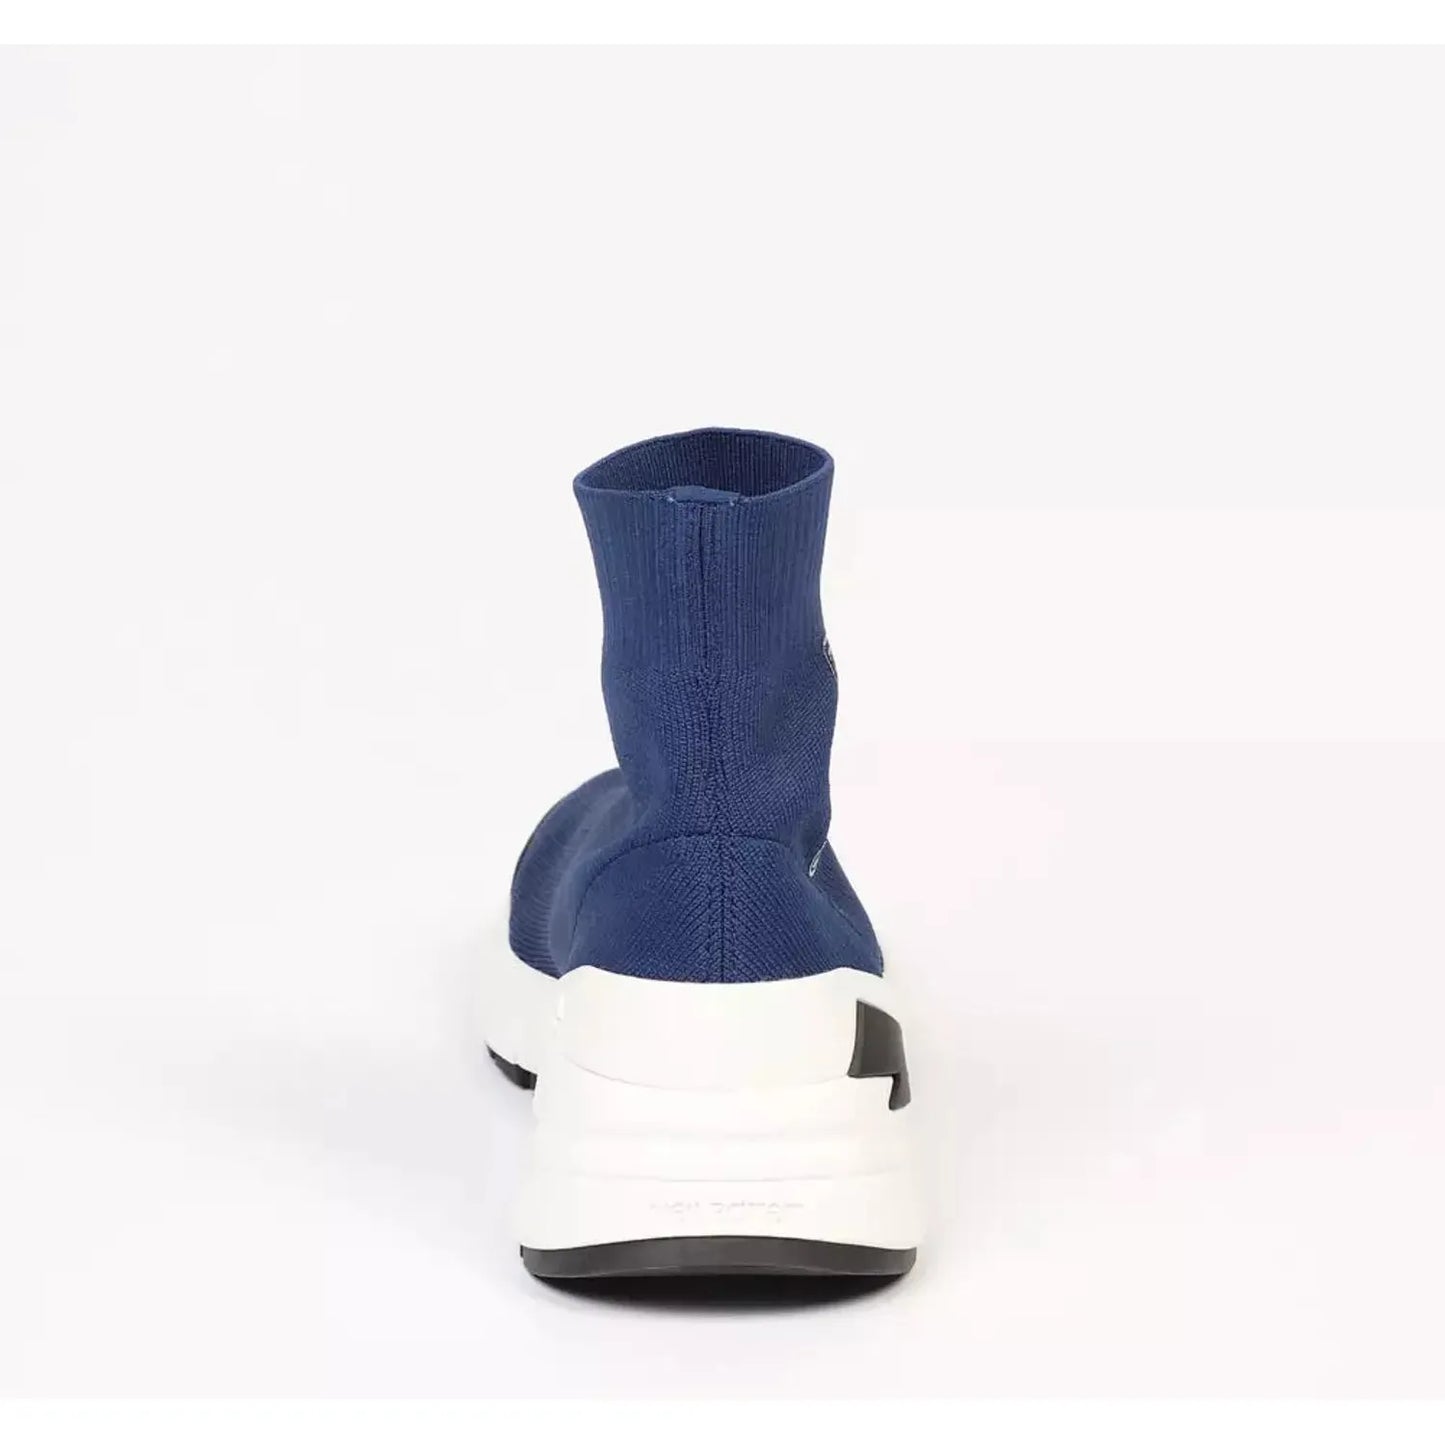 Neil Barrett Electric Bolt Sock Sneakers in Blue blue-textile-lining-sneaker stock_product_image_21105_905630753-18-859344e1-bea.webp